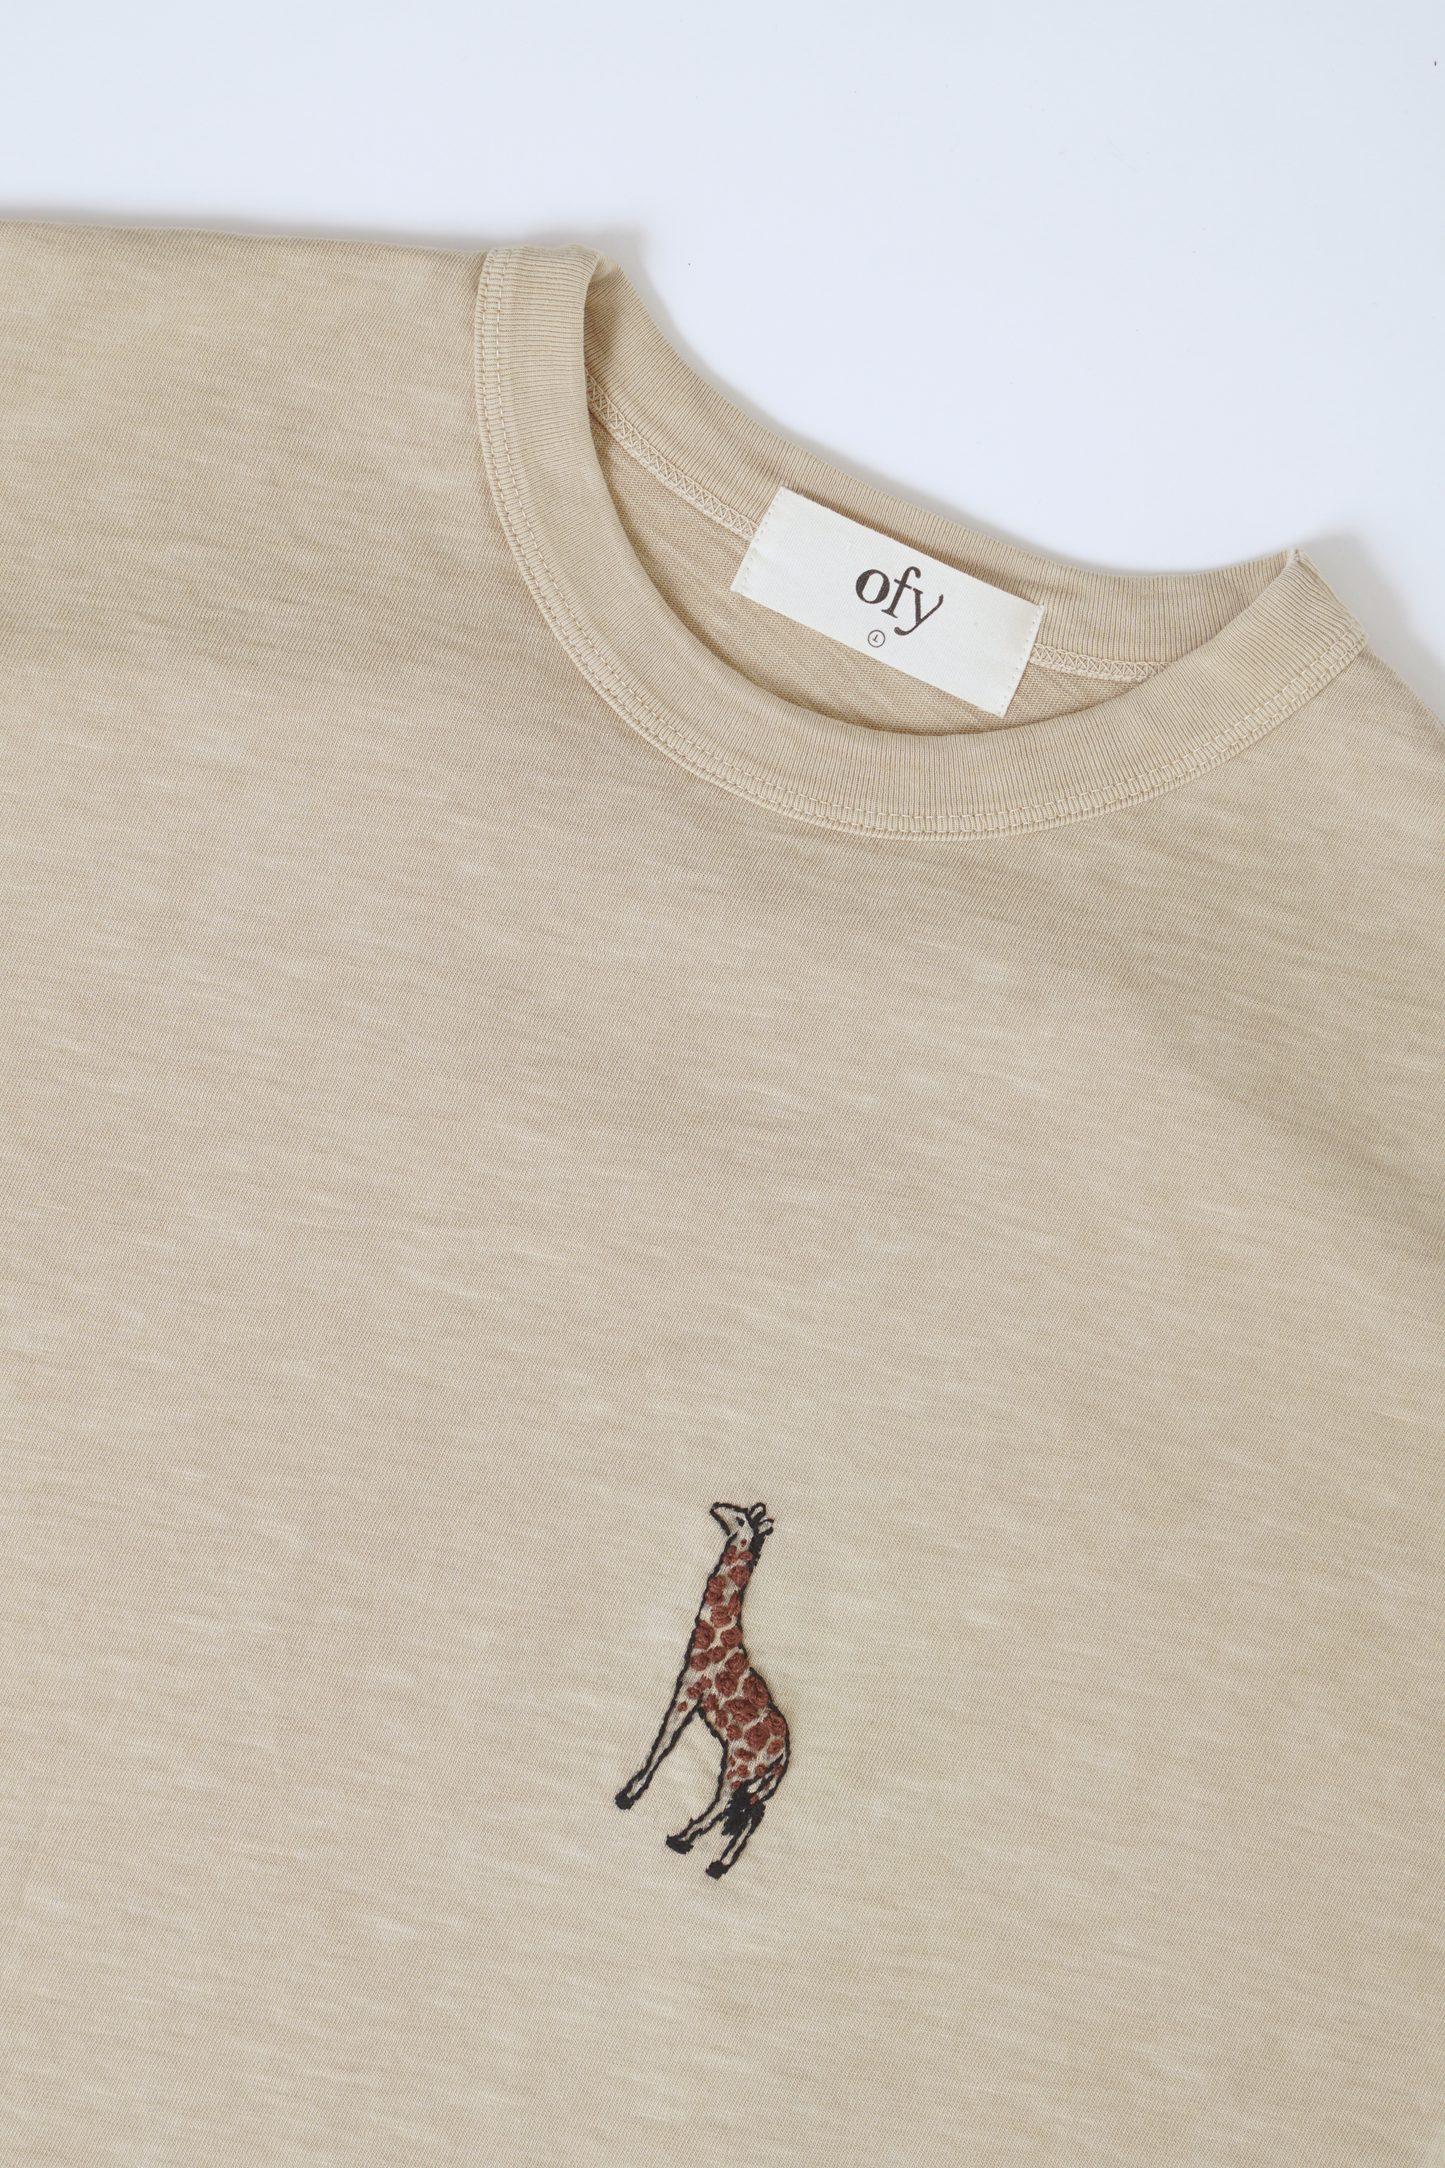 Embroidered Journey Tee - Giraffe